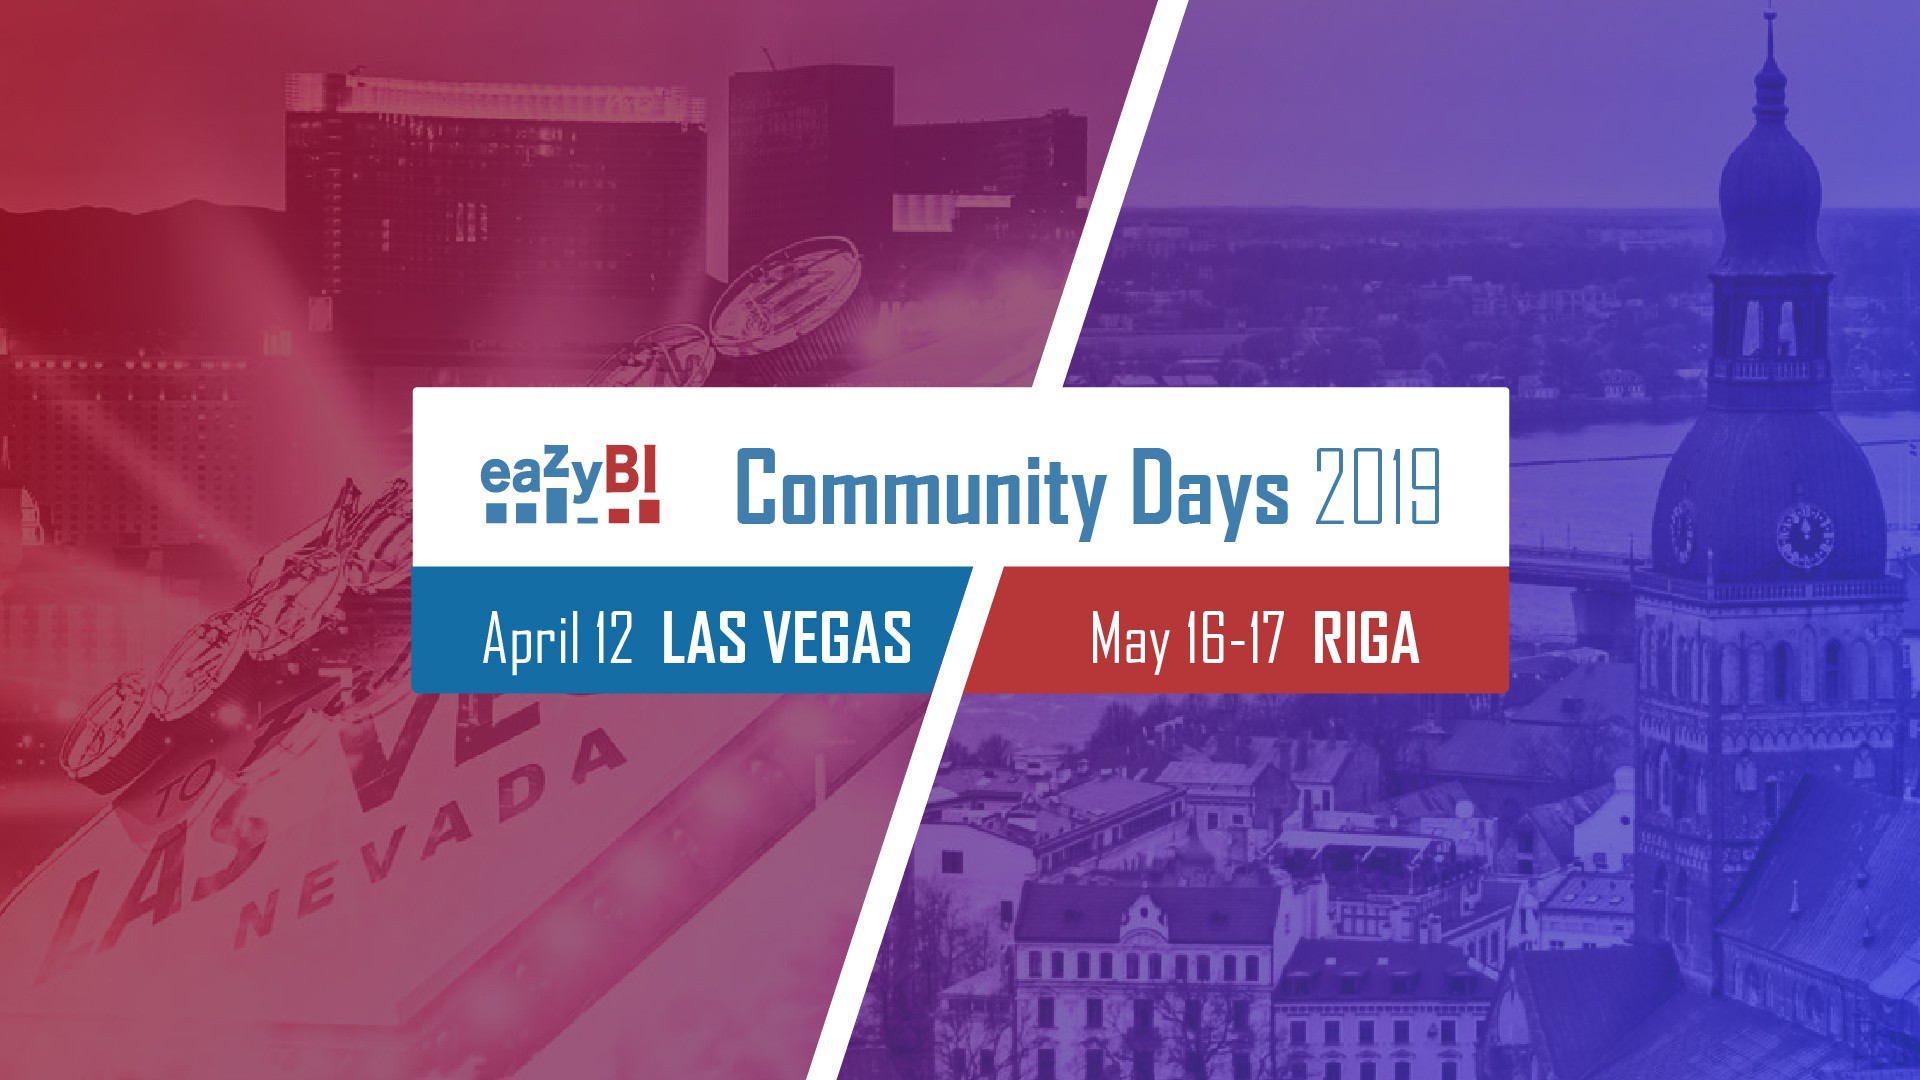 eazyBI Community Day events in Las Vegas & Riga